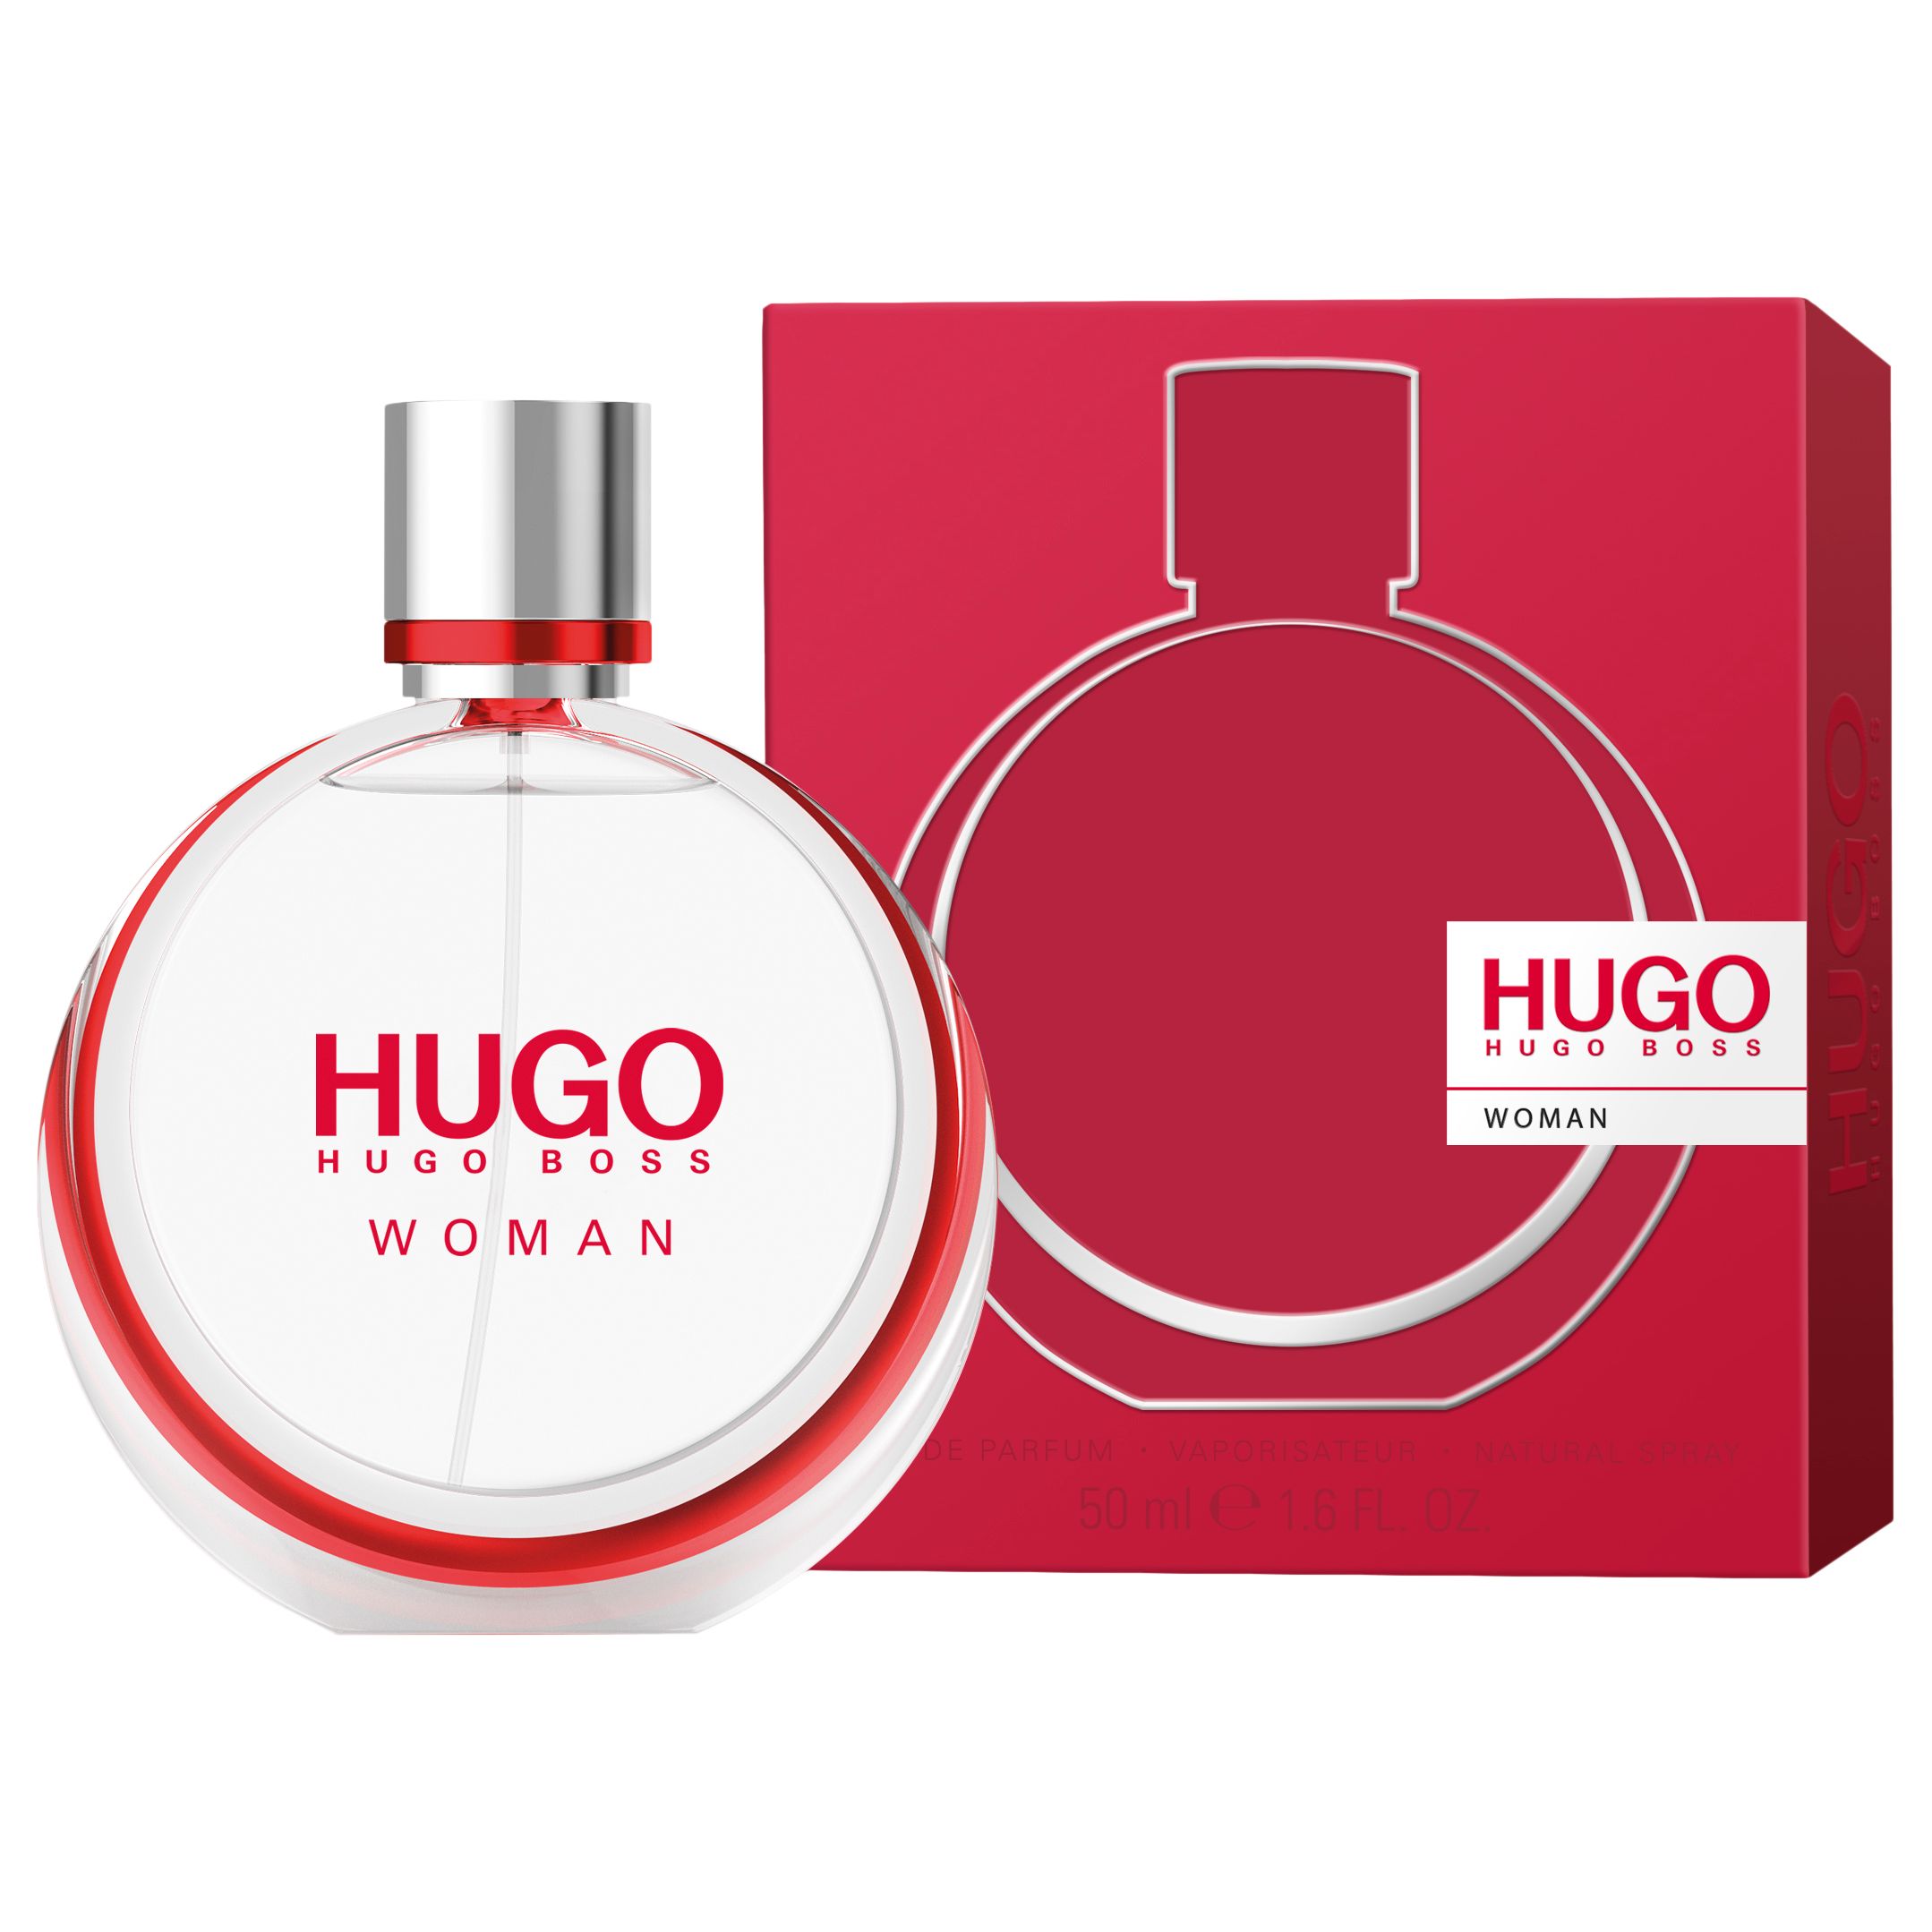 HUGO Woman Eau de Parfum, 50ml 2